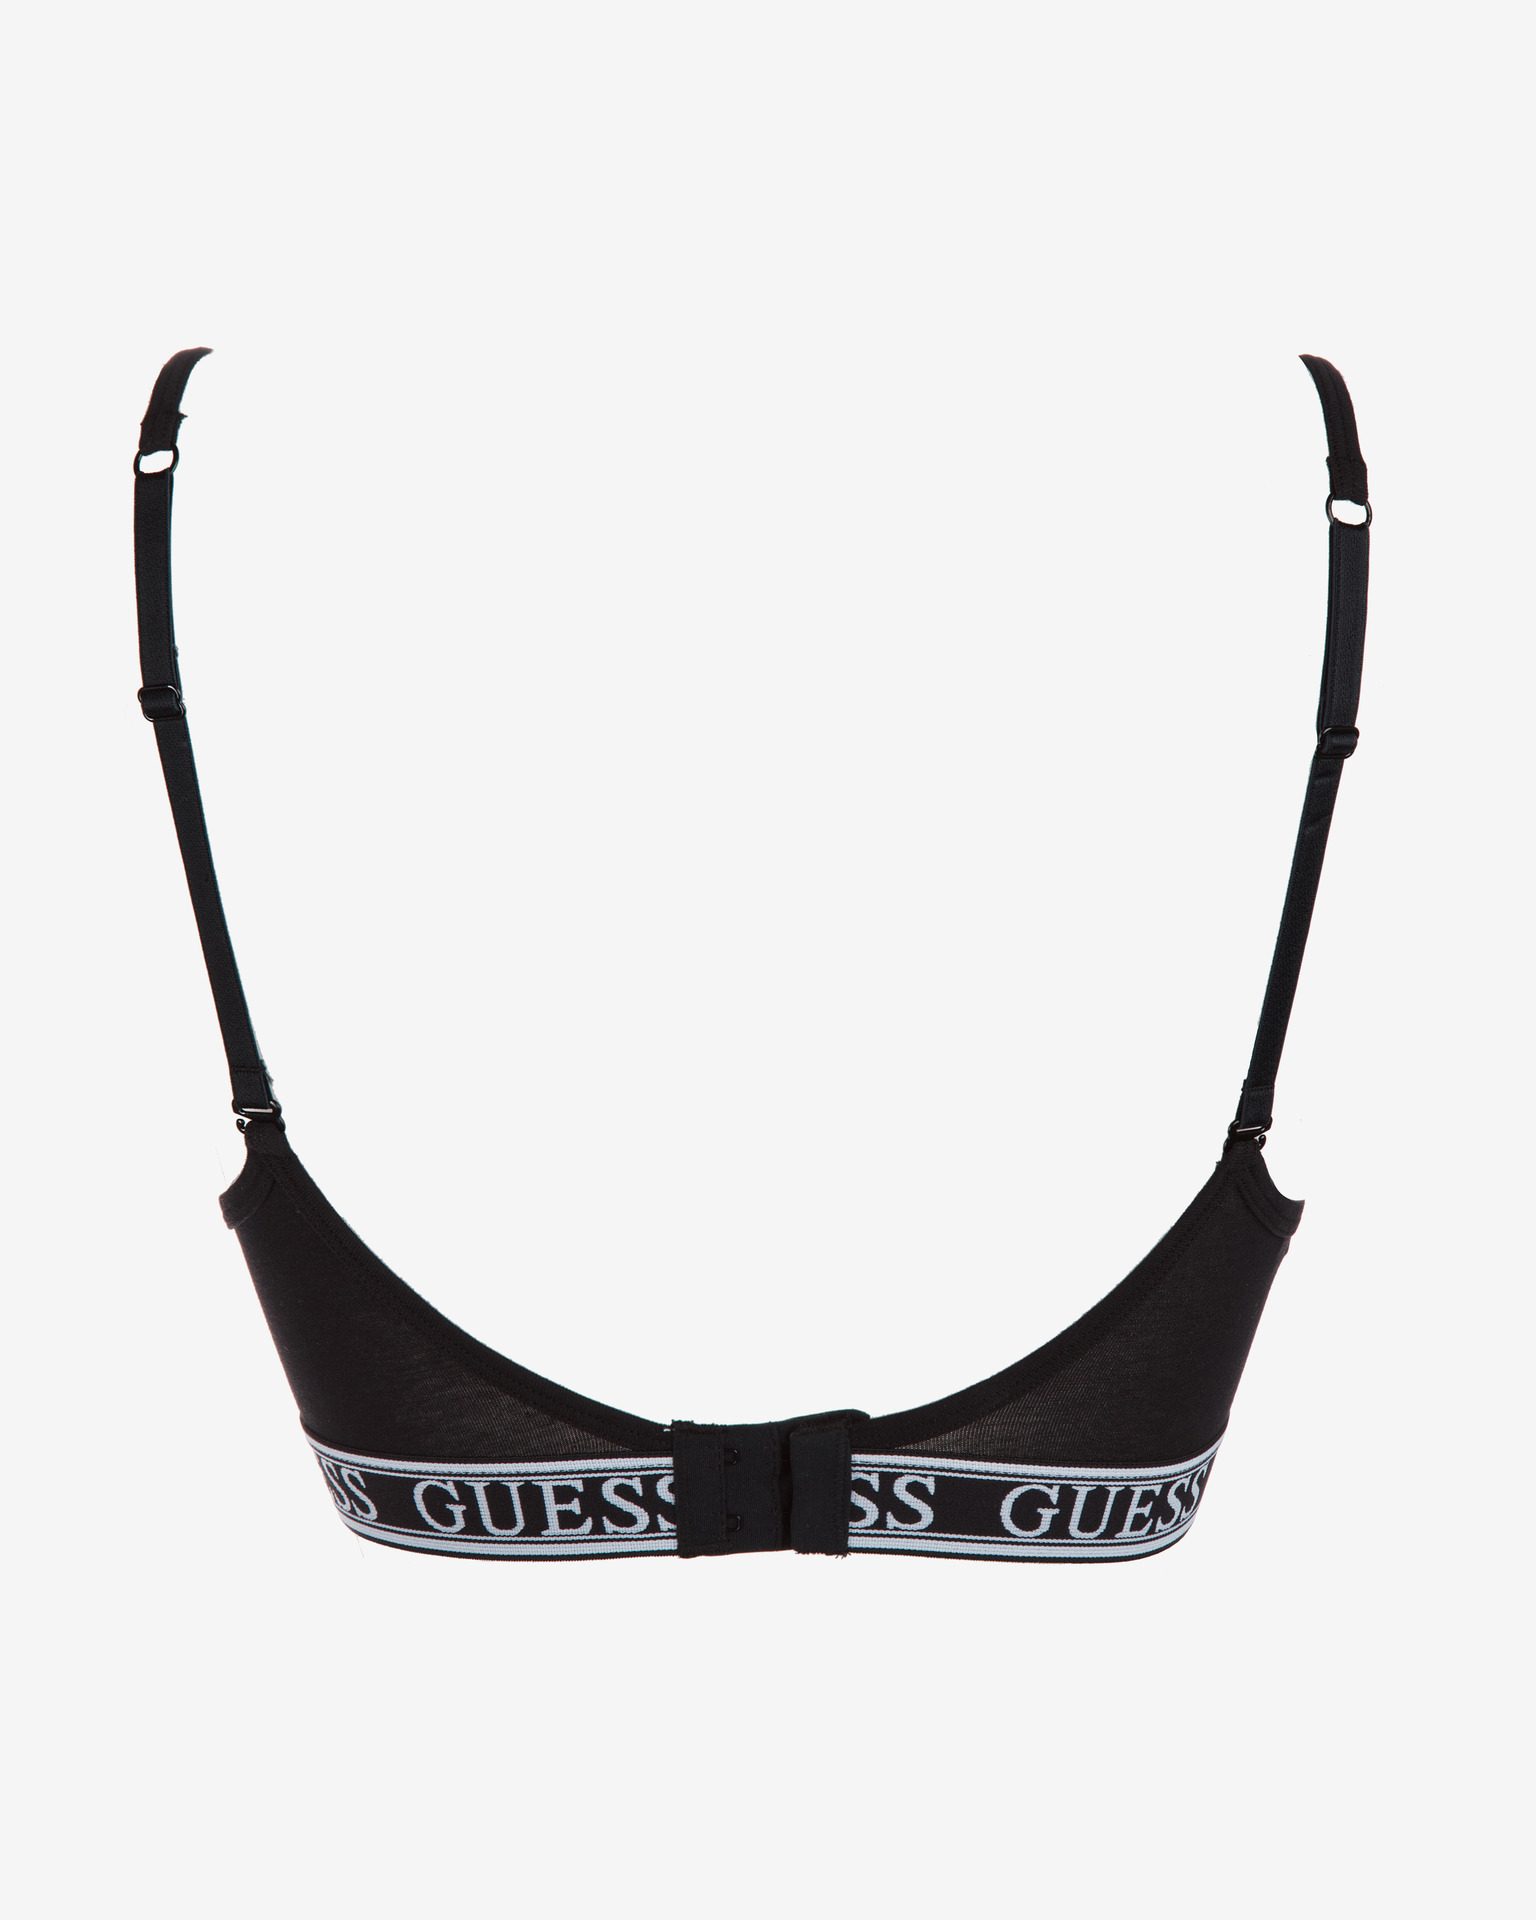 Black padded bra brand GUESS — /en